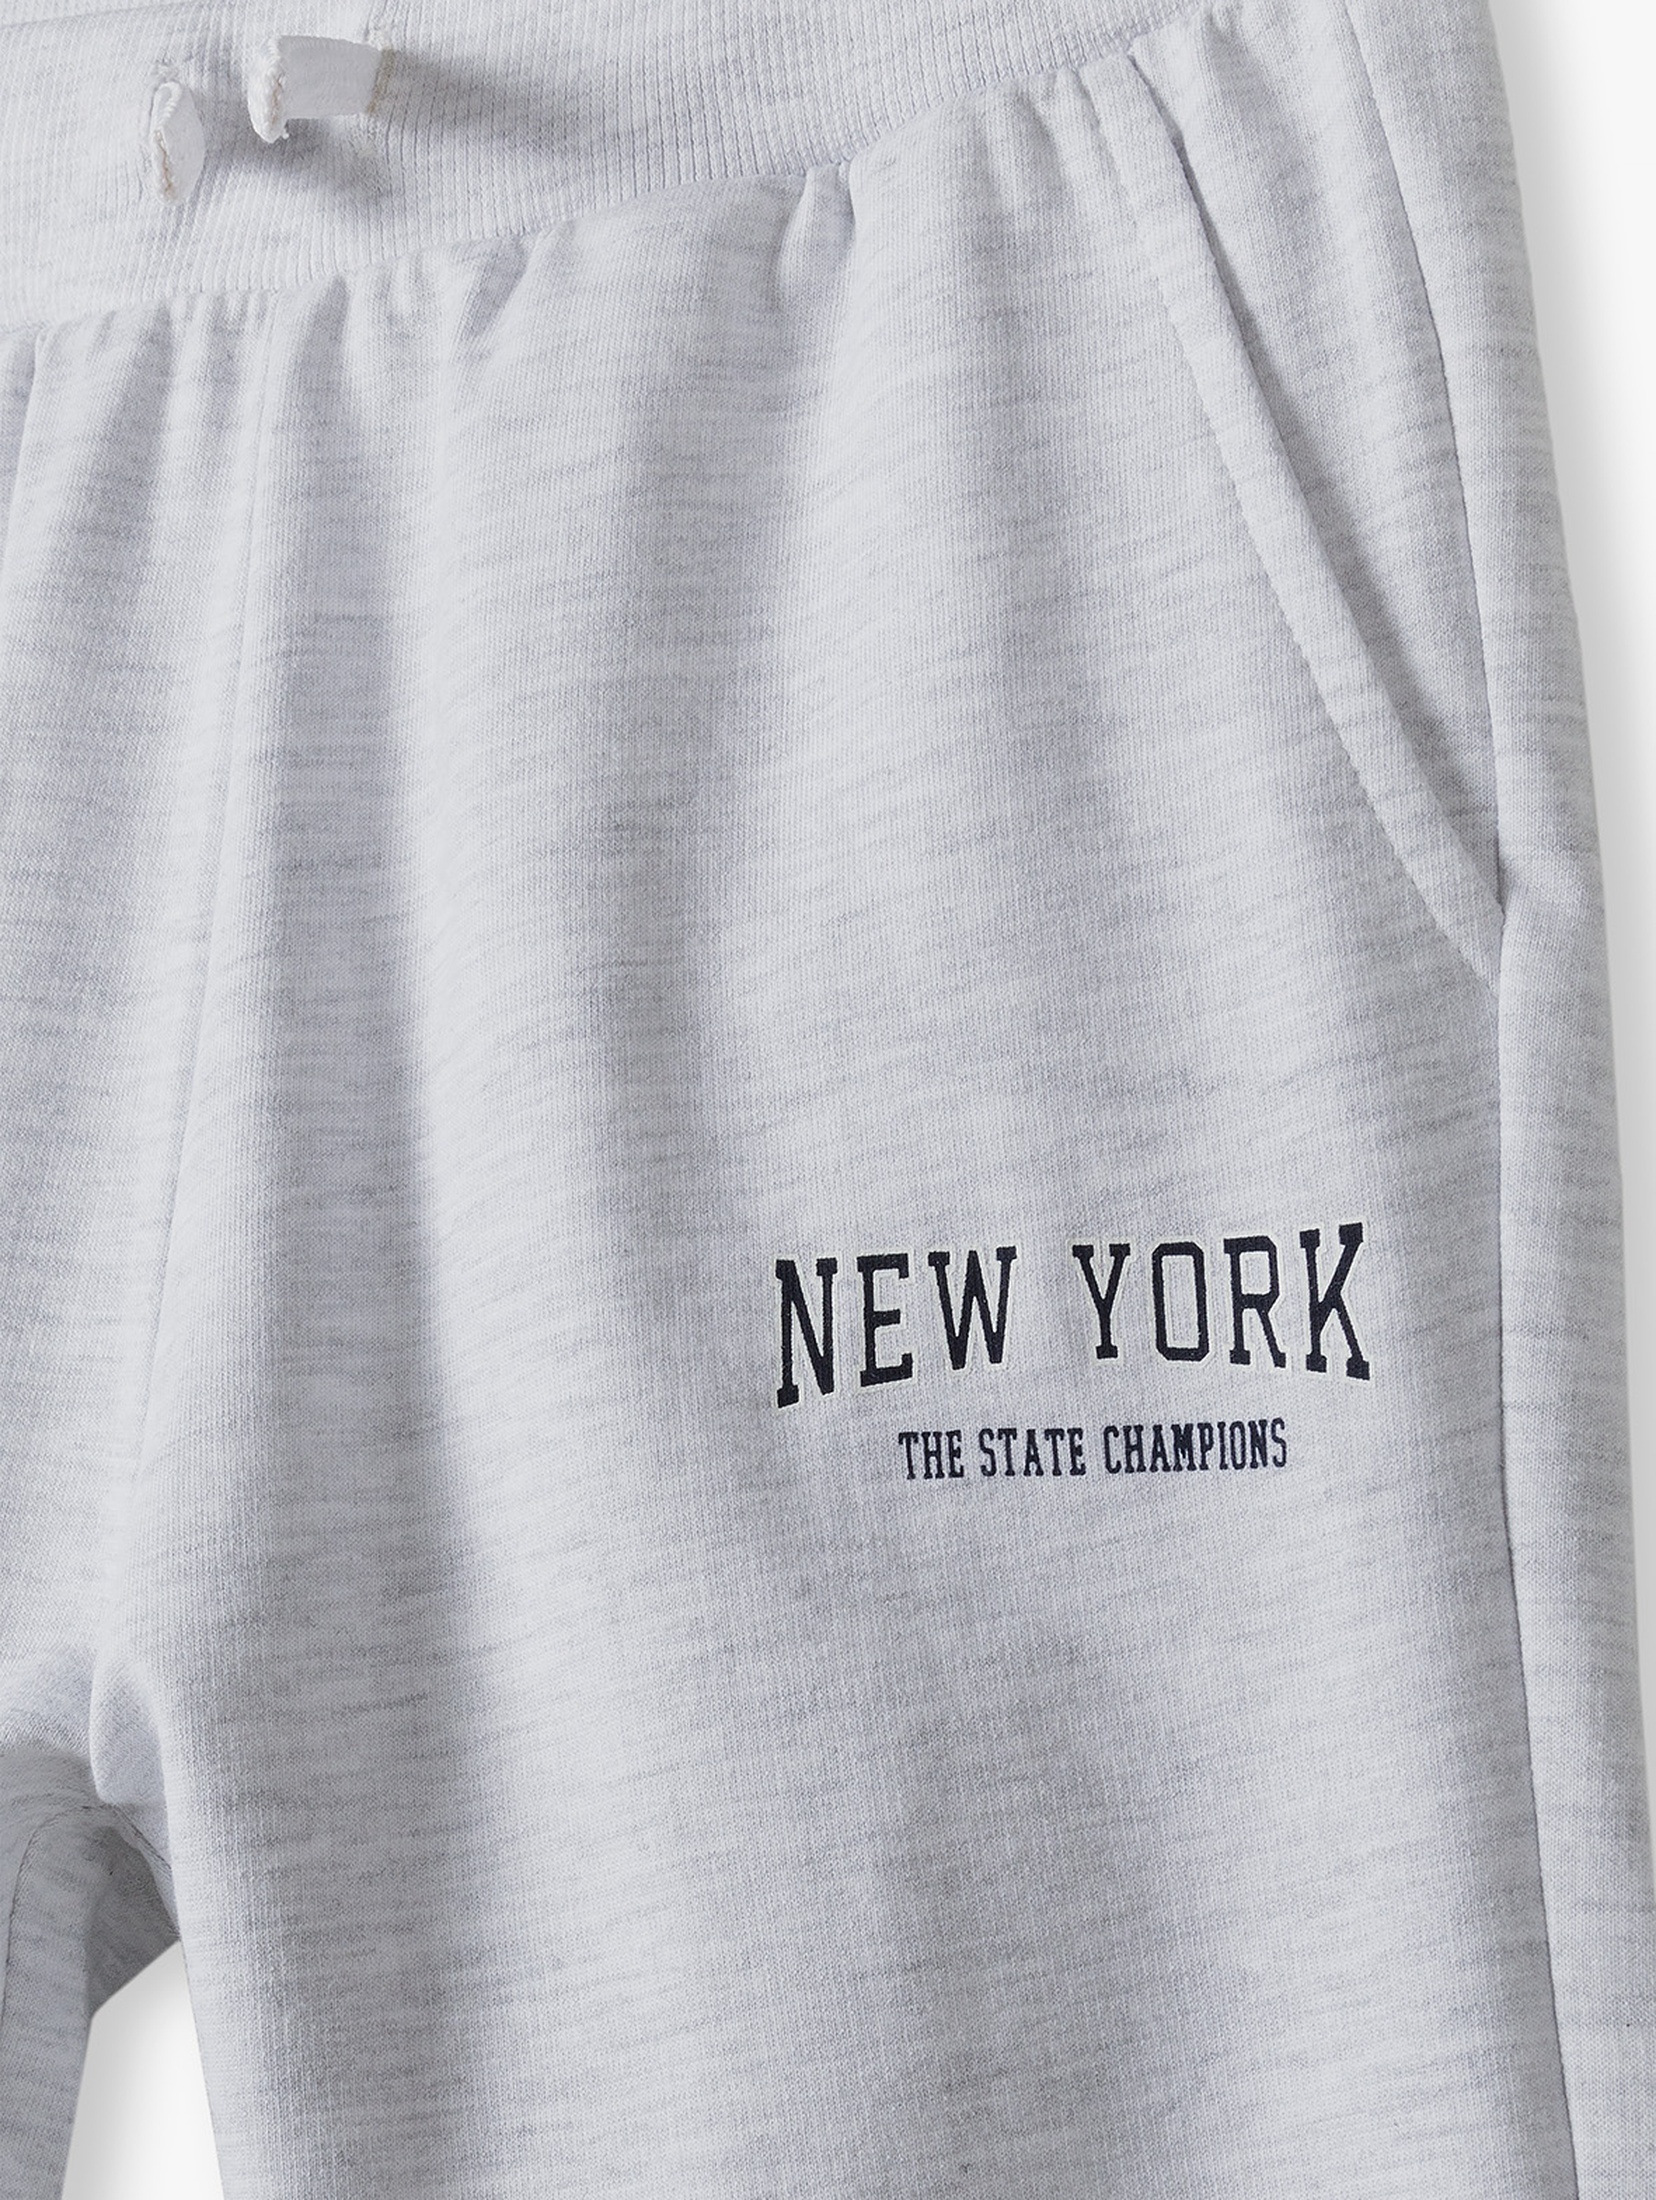 Szare spodnie dresowe regular - New Jork - szare - 5.10.15